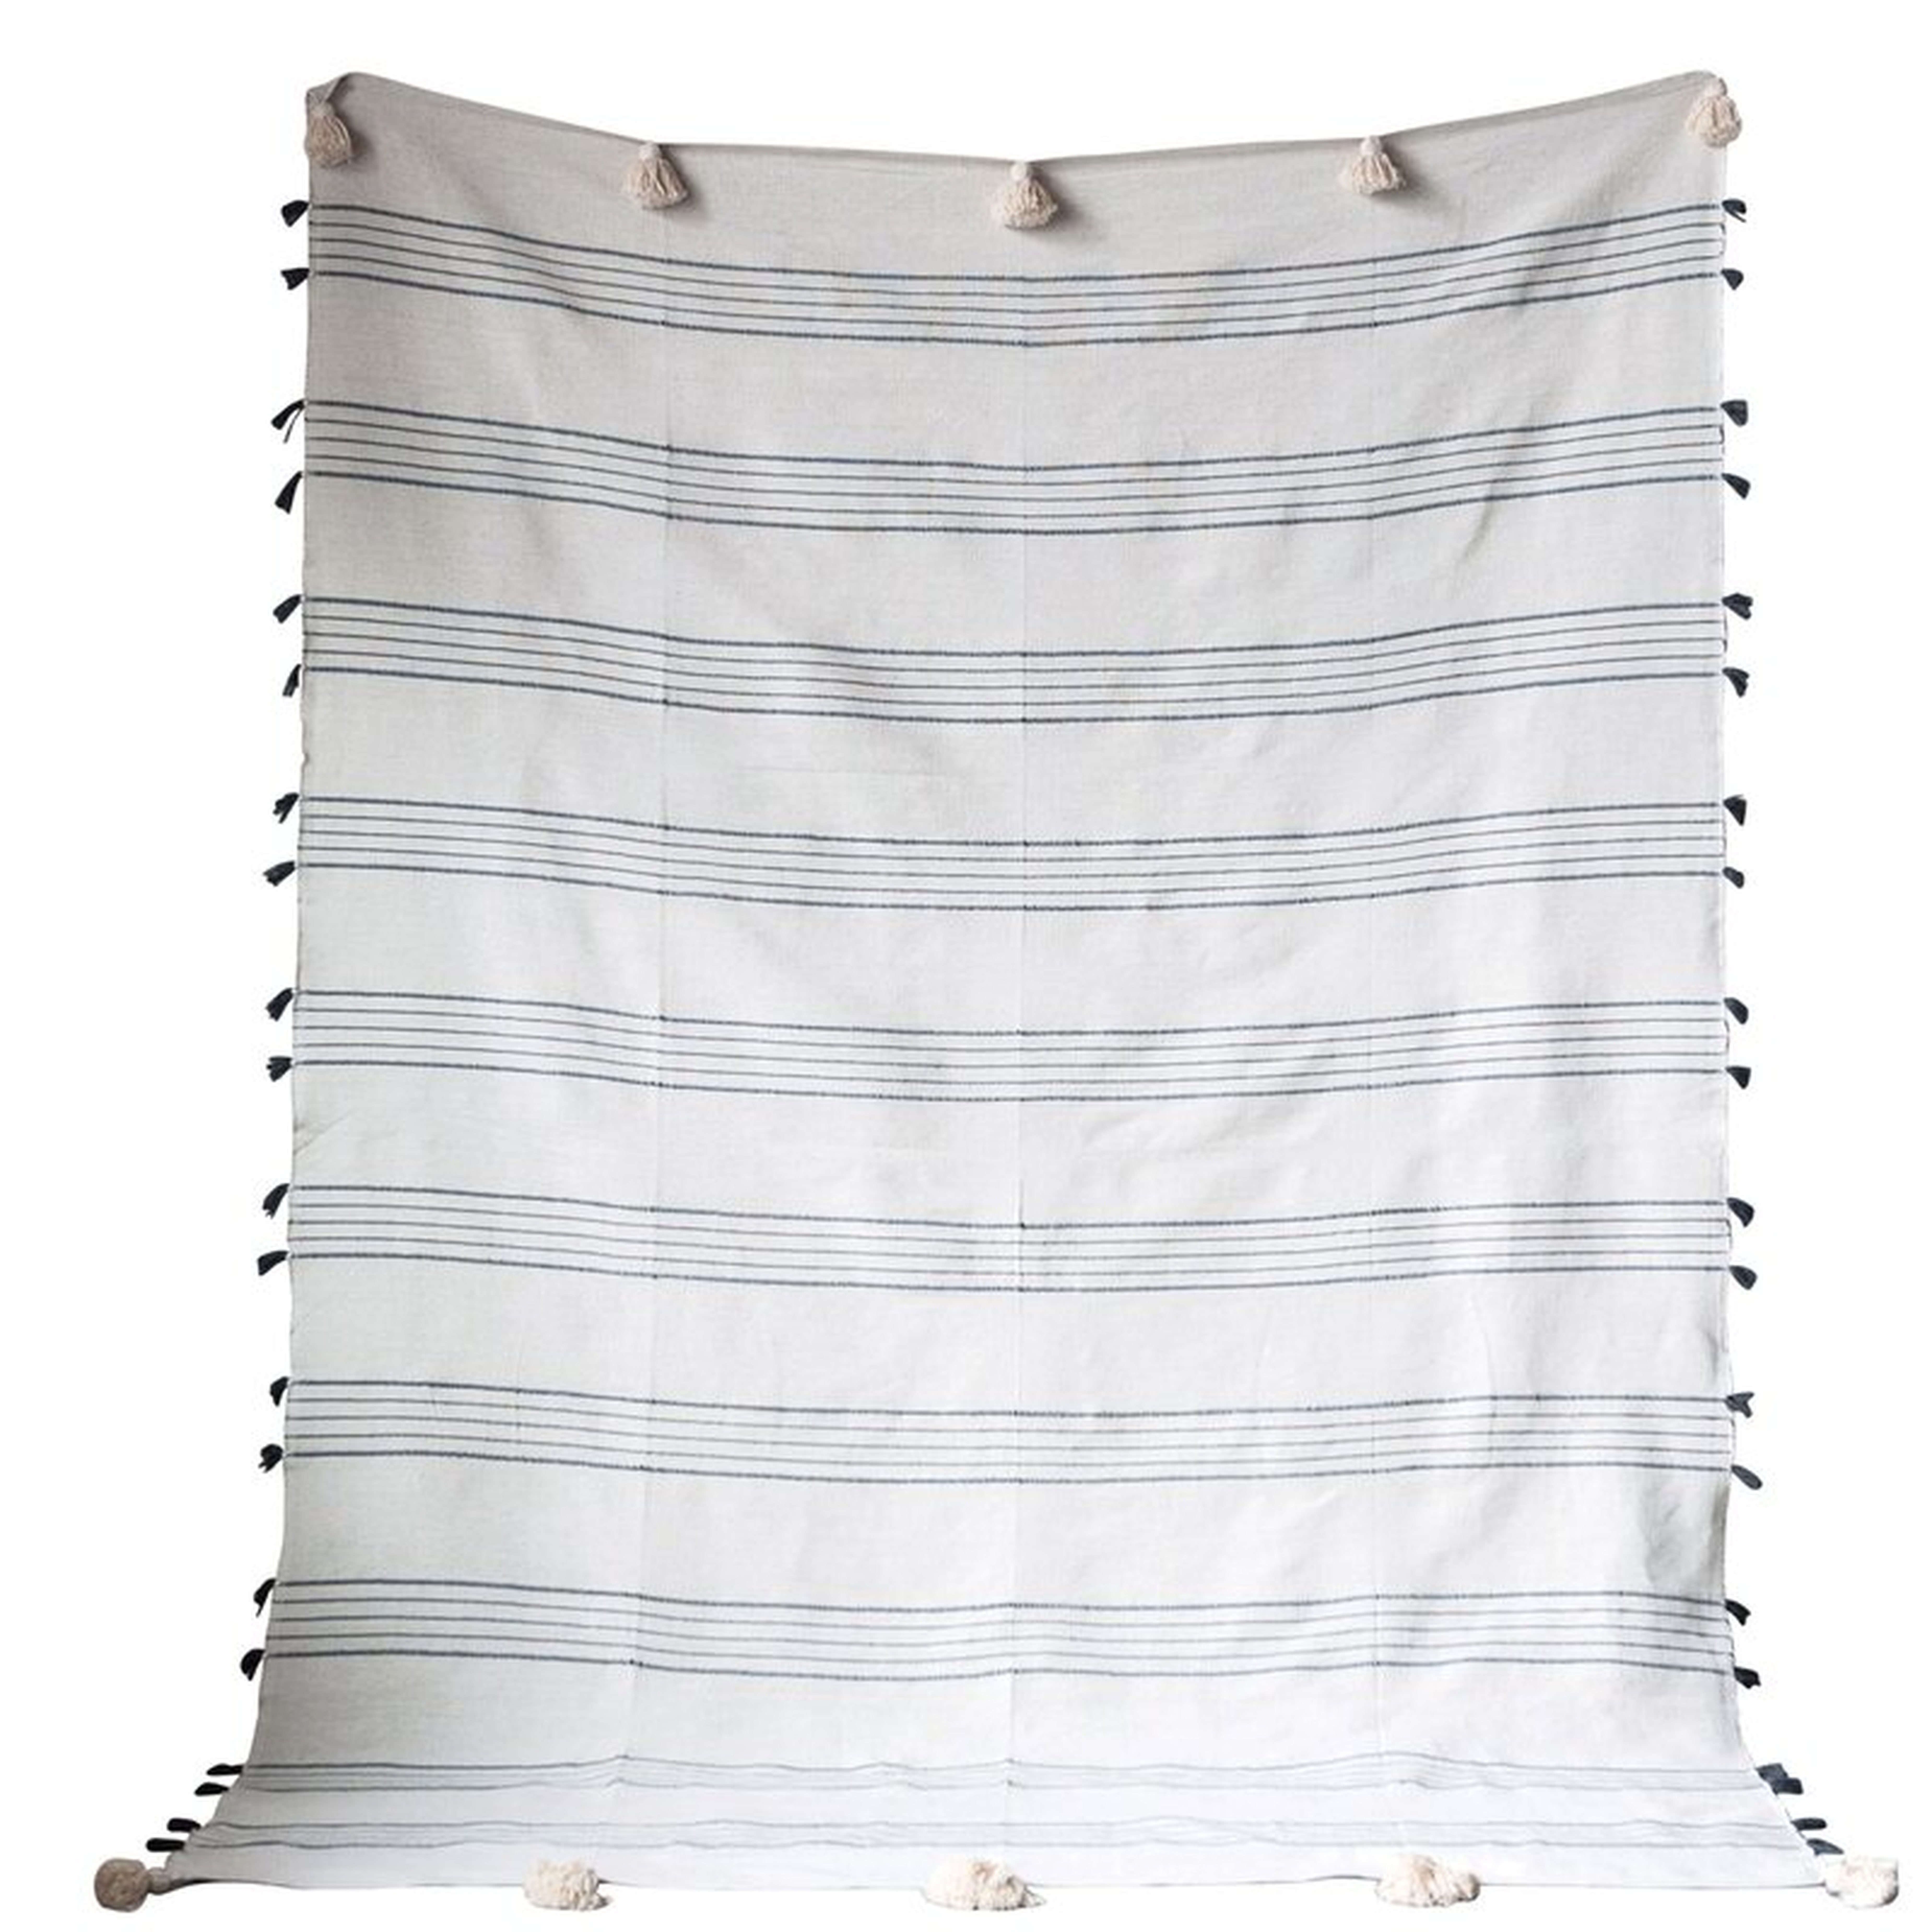 Menefee Striped Hand-Loomed with Tassels Cotton Blanket - Wayfair